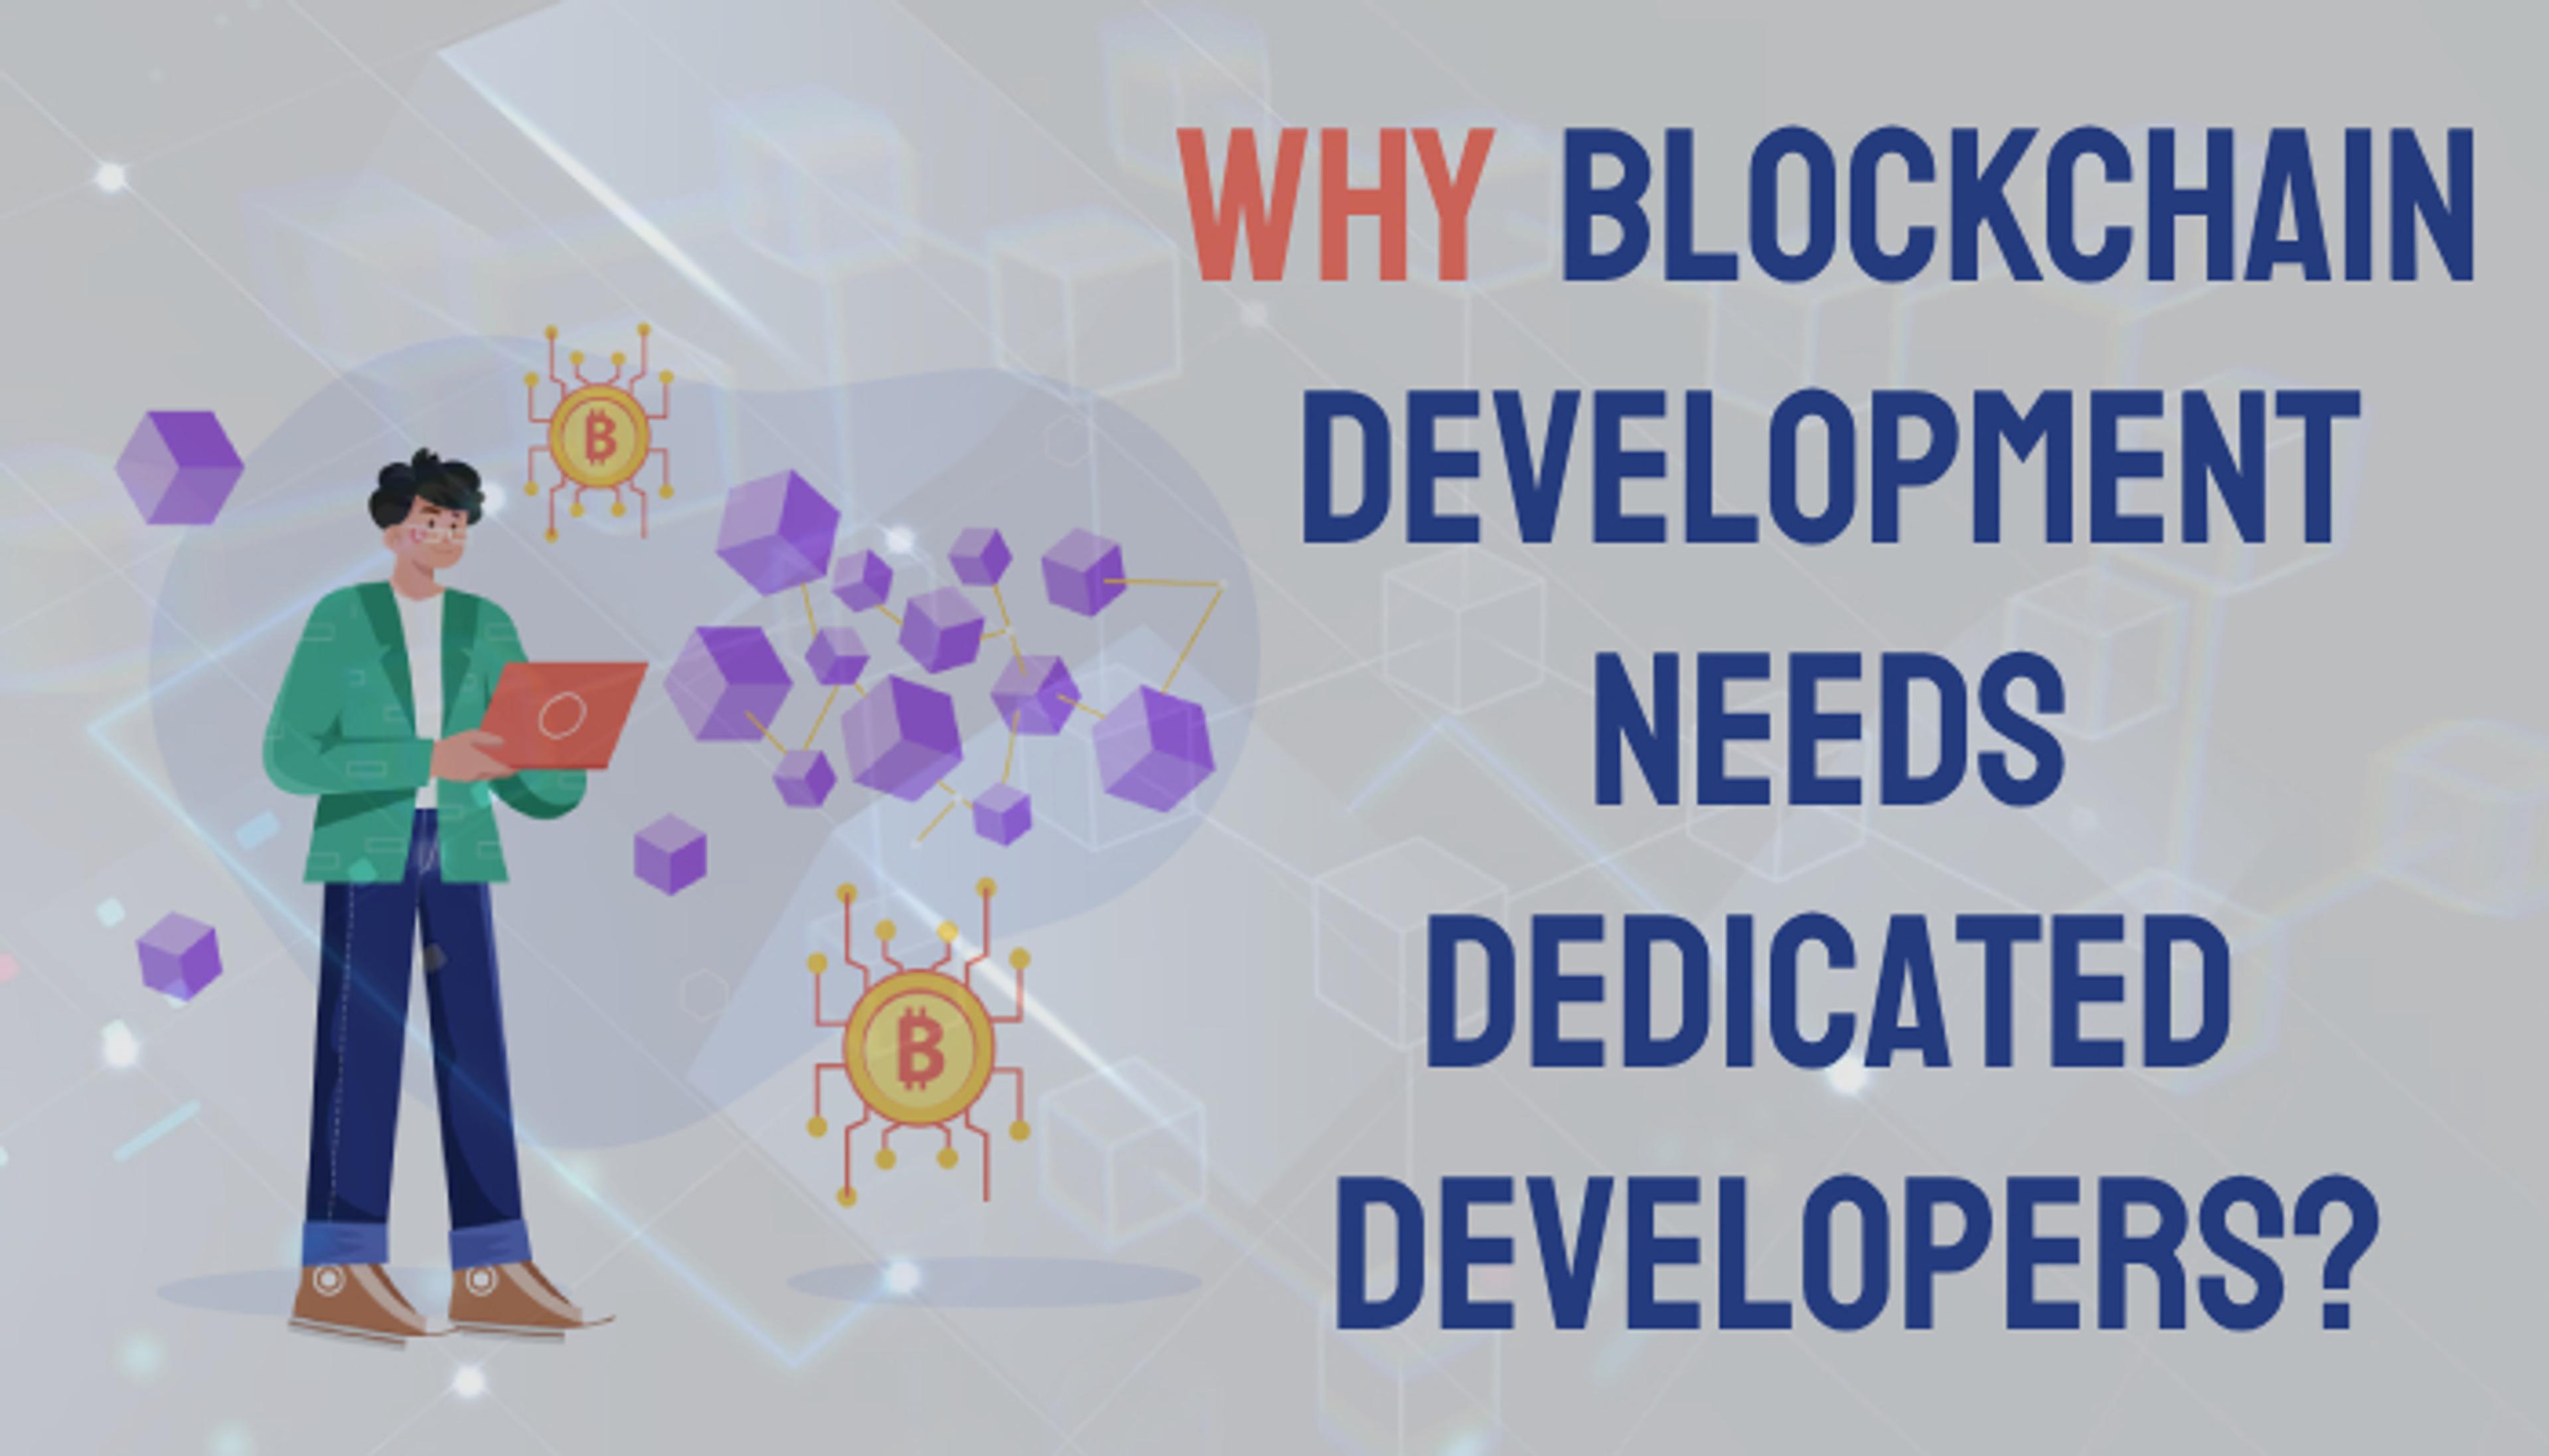 Why Blockchain Development needs Dedicated Developers?